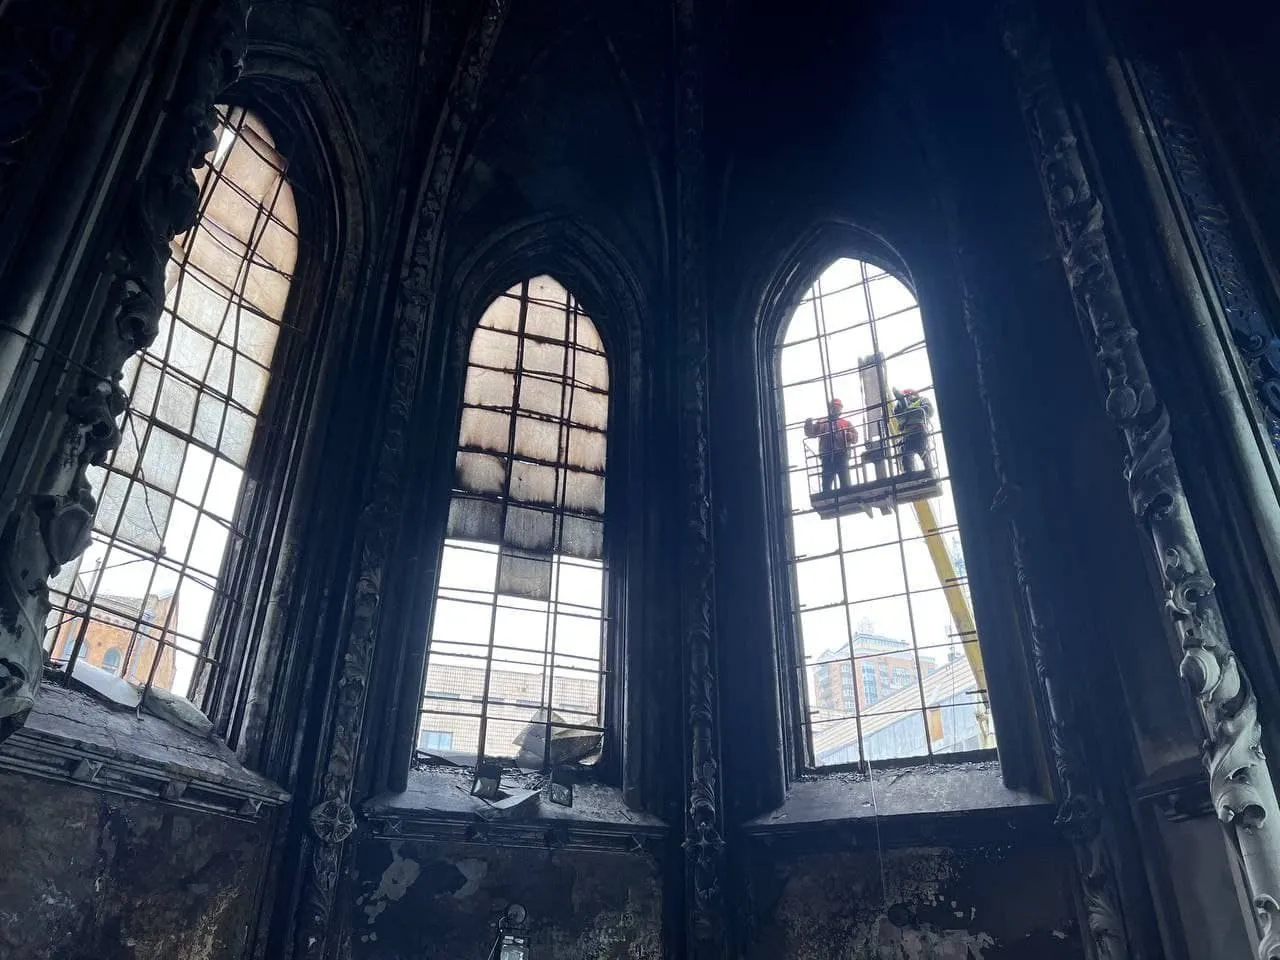 пожежа у костелі святого Миколая, реставратори почали ремонт